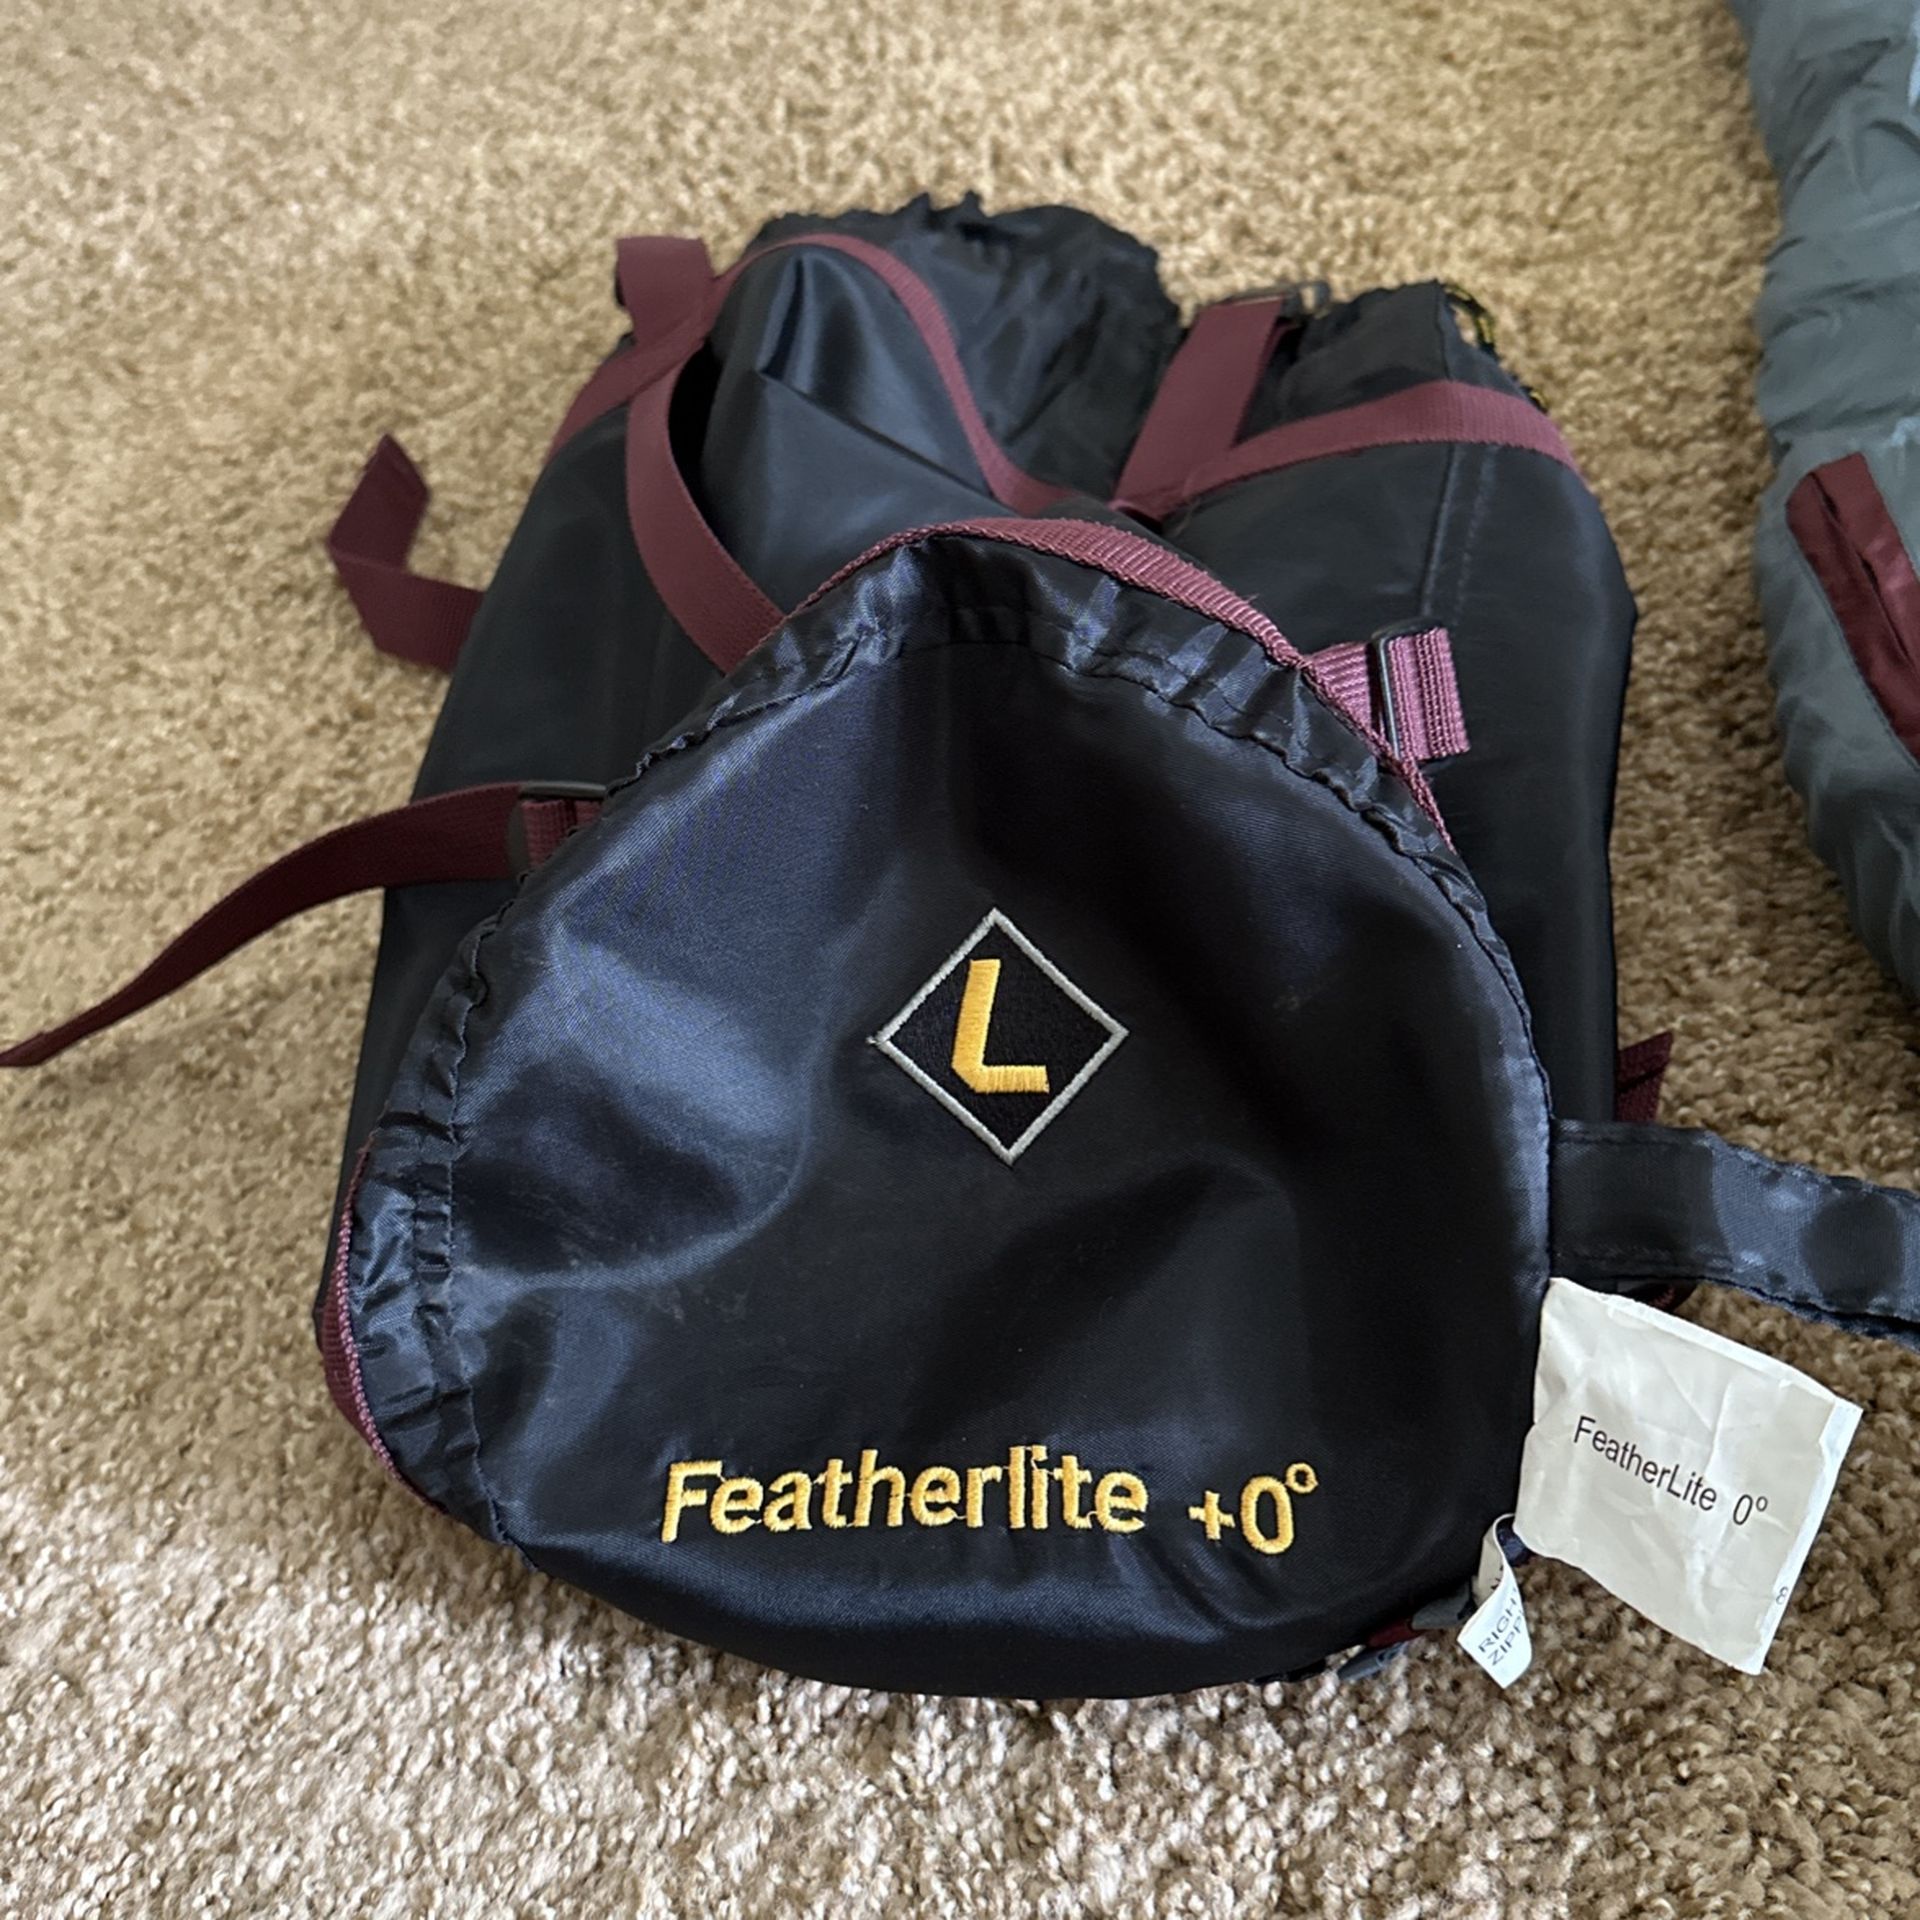 Featherlite +0 Backpacking Sleeping Bag 